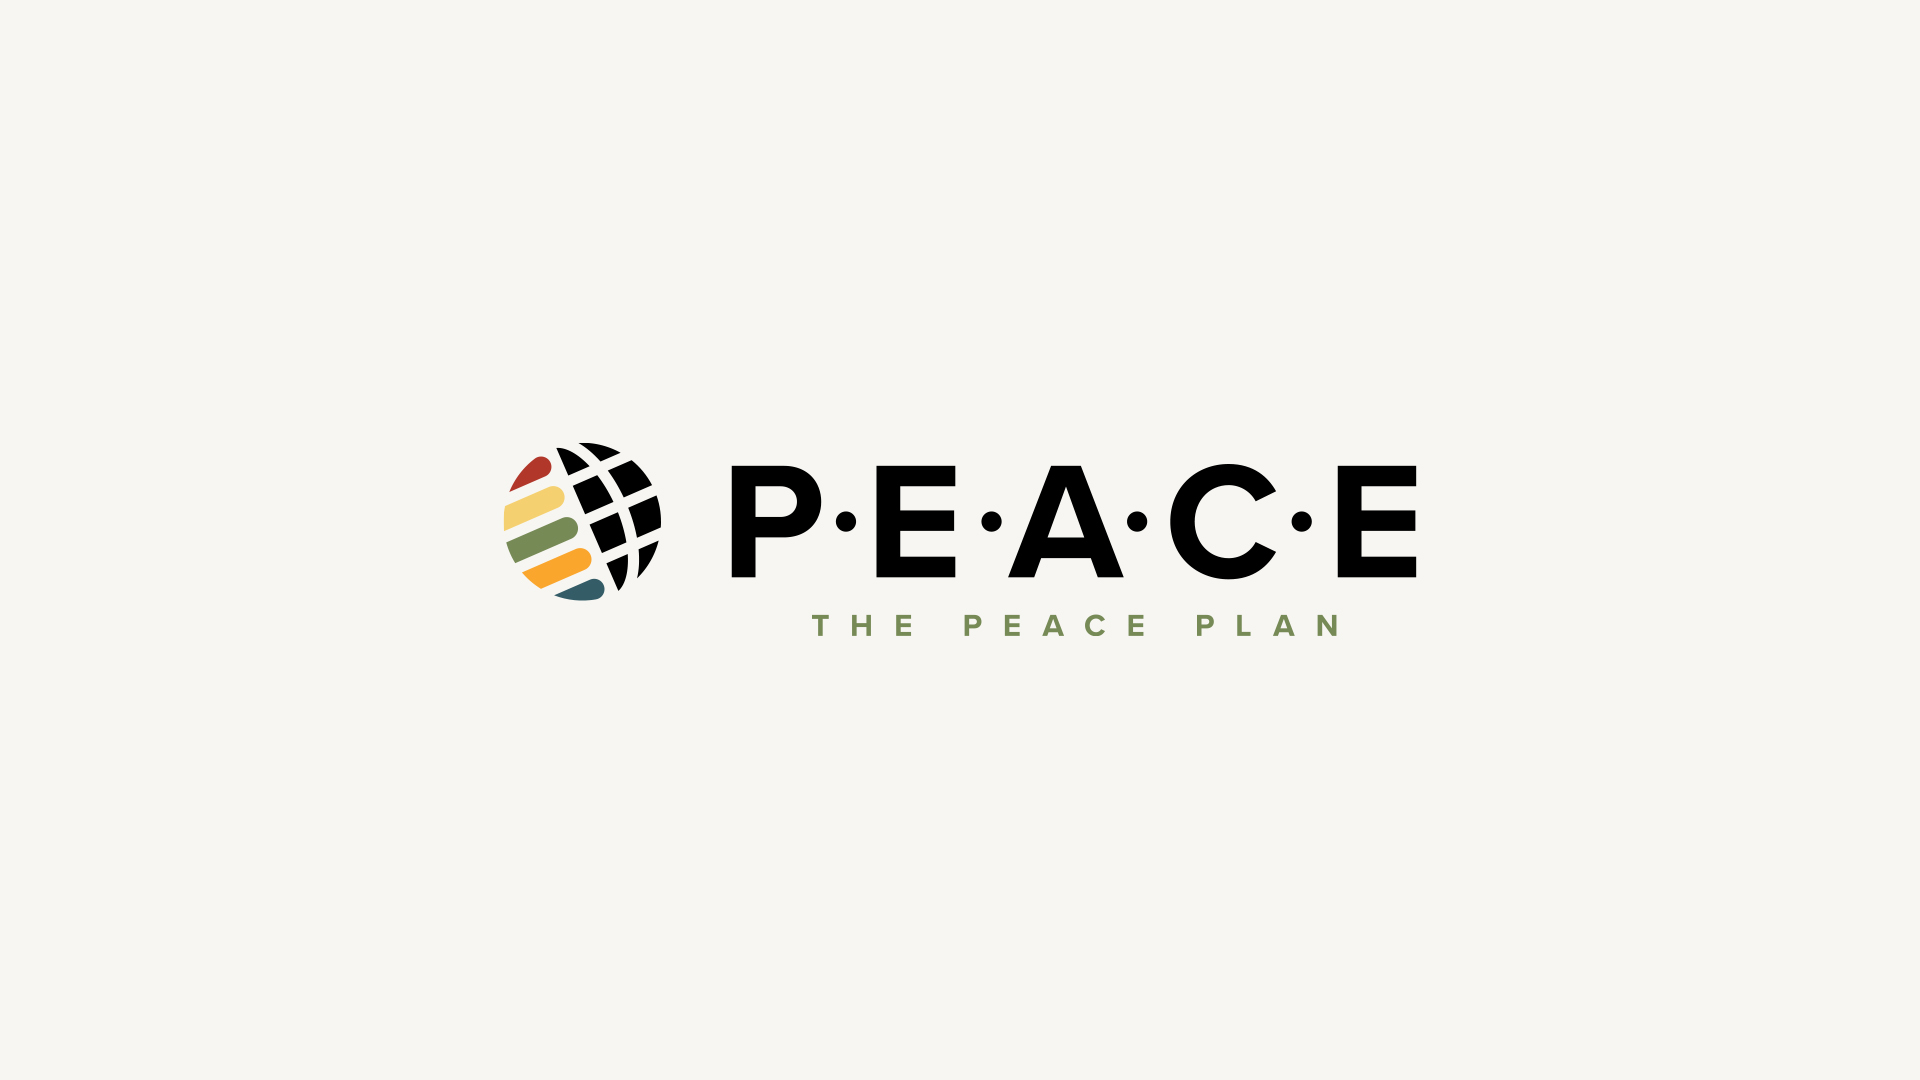 The PEACE Plan